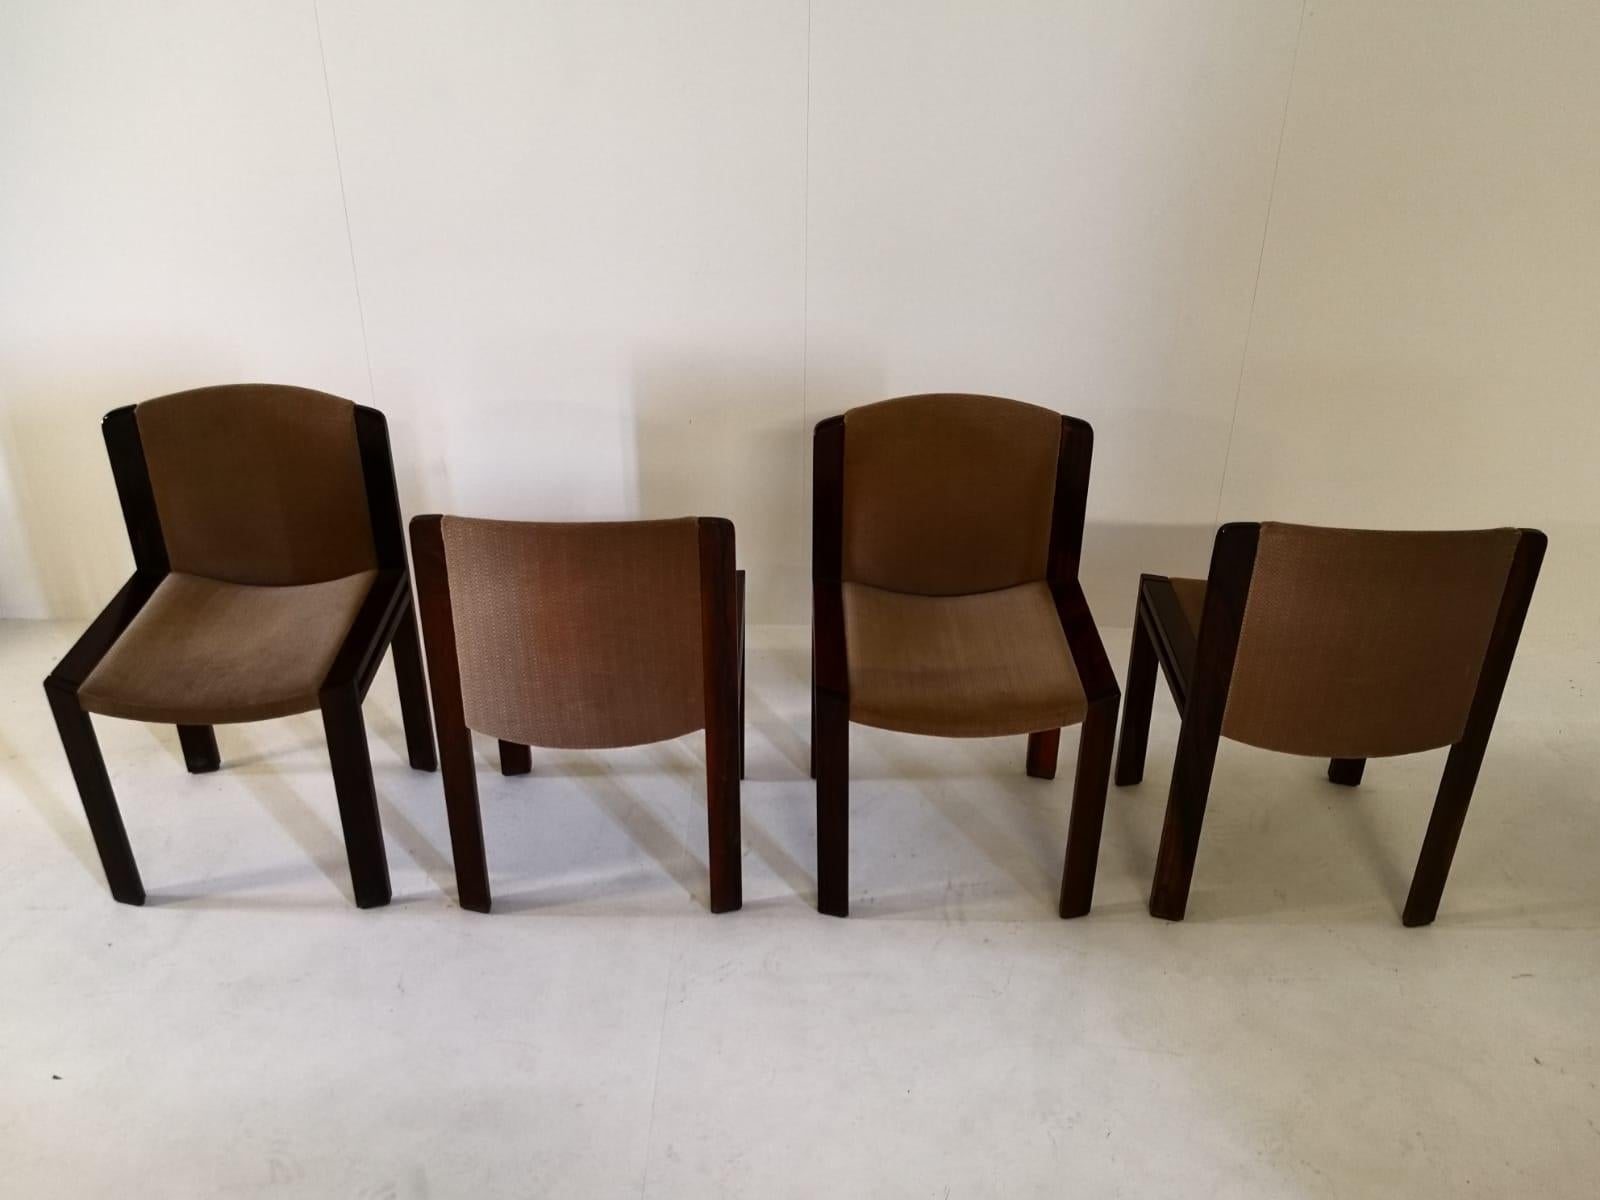 Fabric Mid-Century Modern Italian Set of 4 Chairs Model 300 by Joe Colombo, 1965